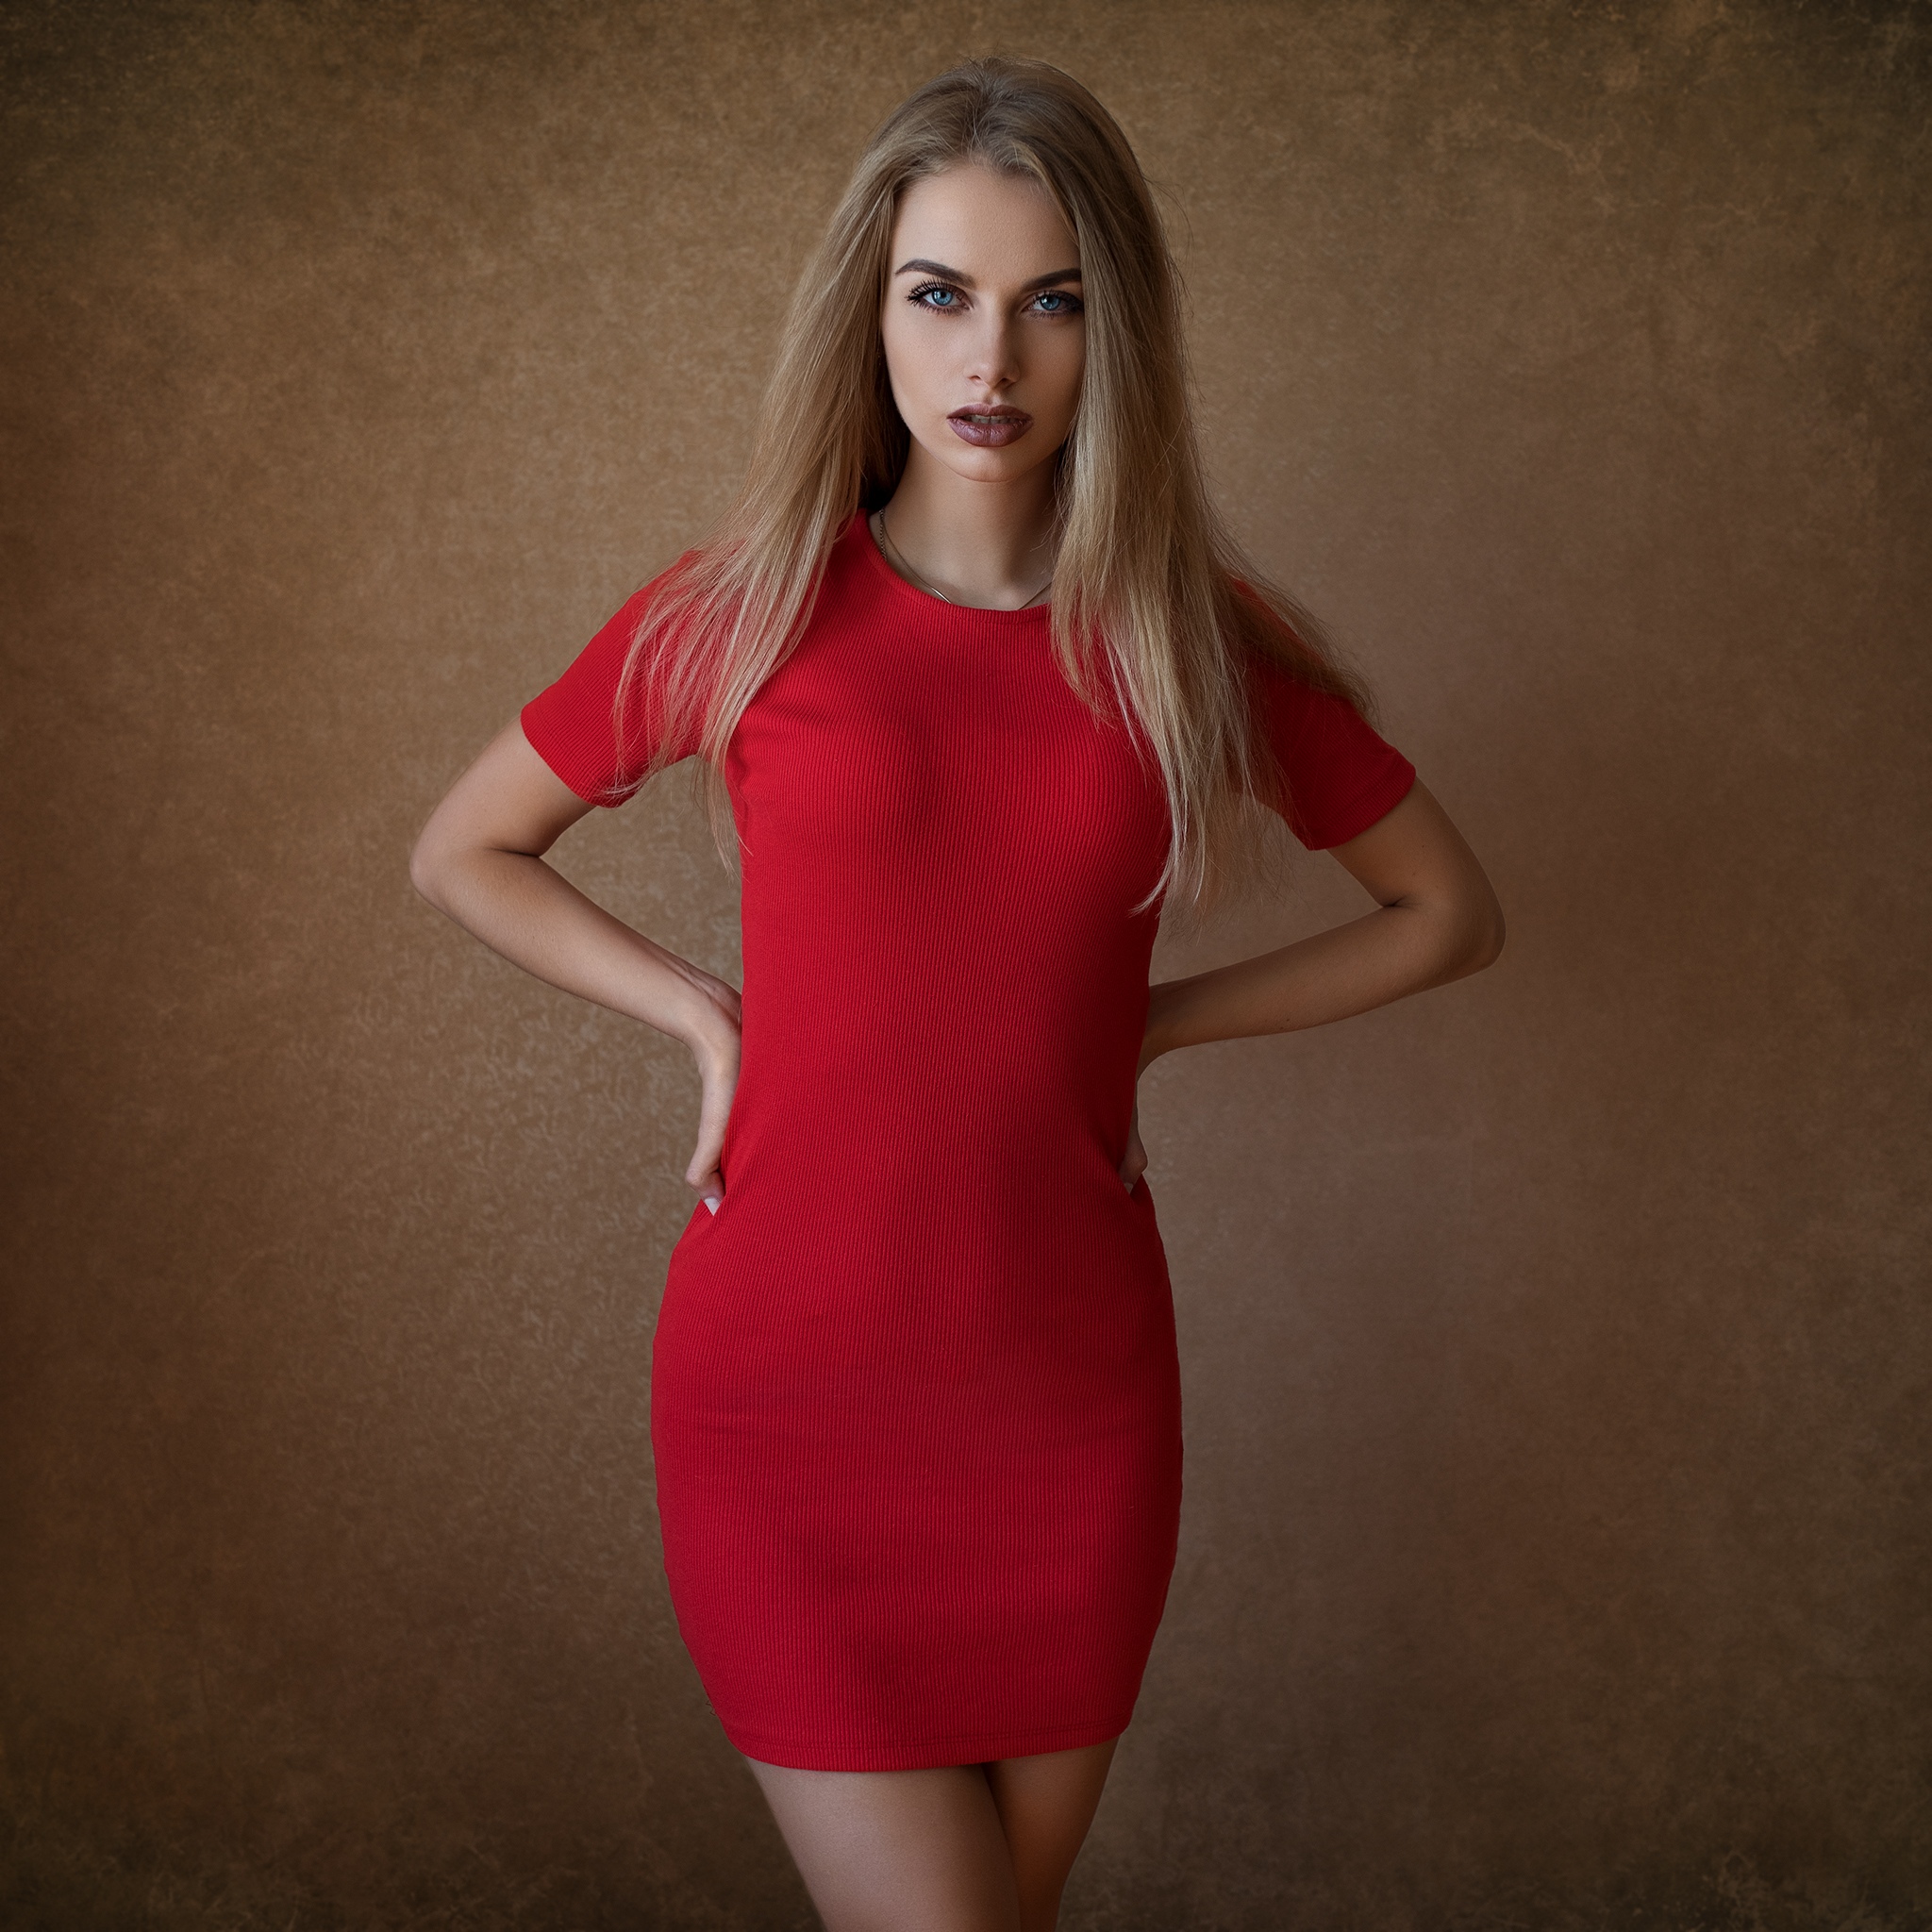 Dmitry Shulgin Red Dress Women Model Blonde Blue Eyes Tight Dress Standing Simple Background Red Bro 2048x2048